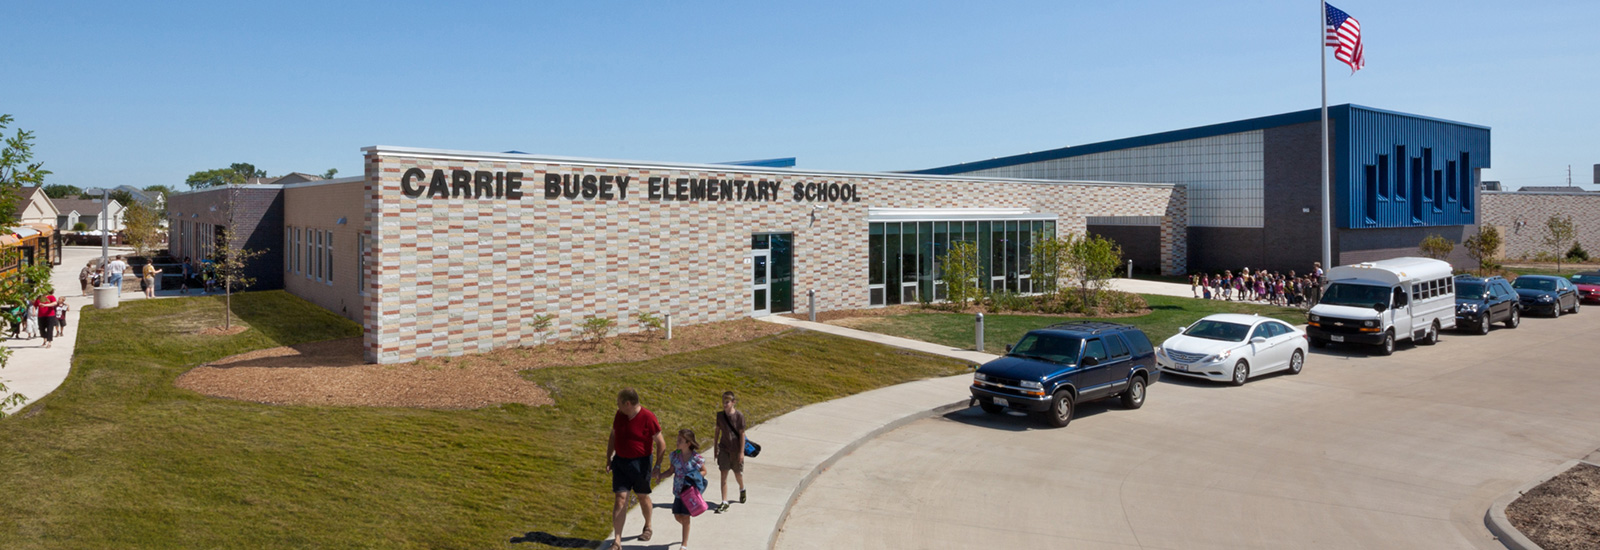 carrie busey school building